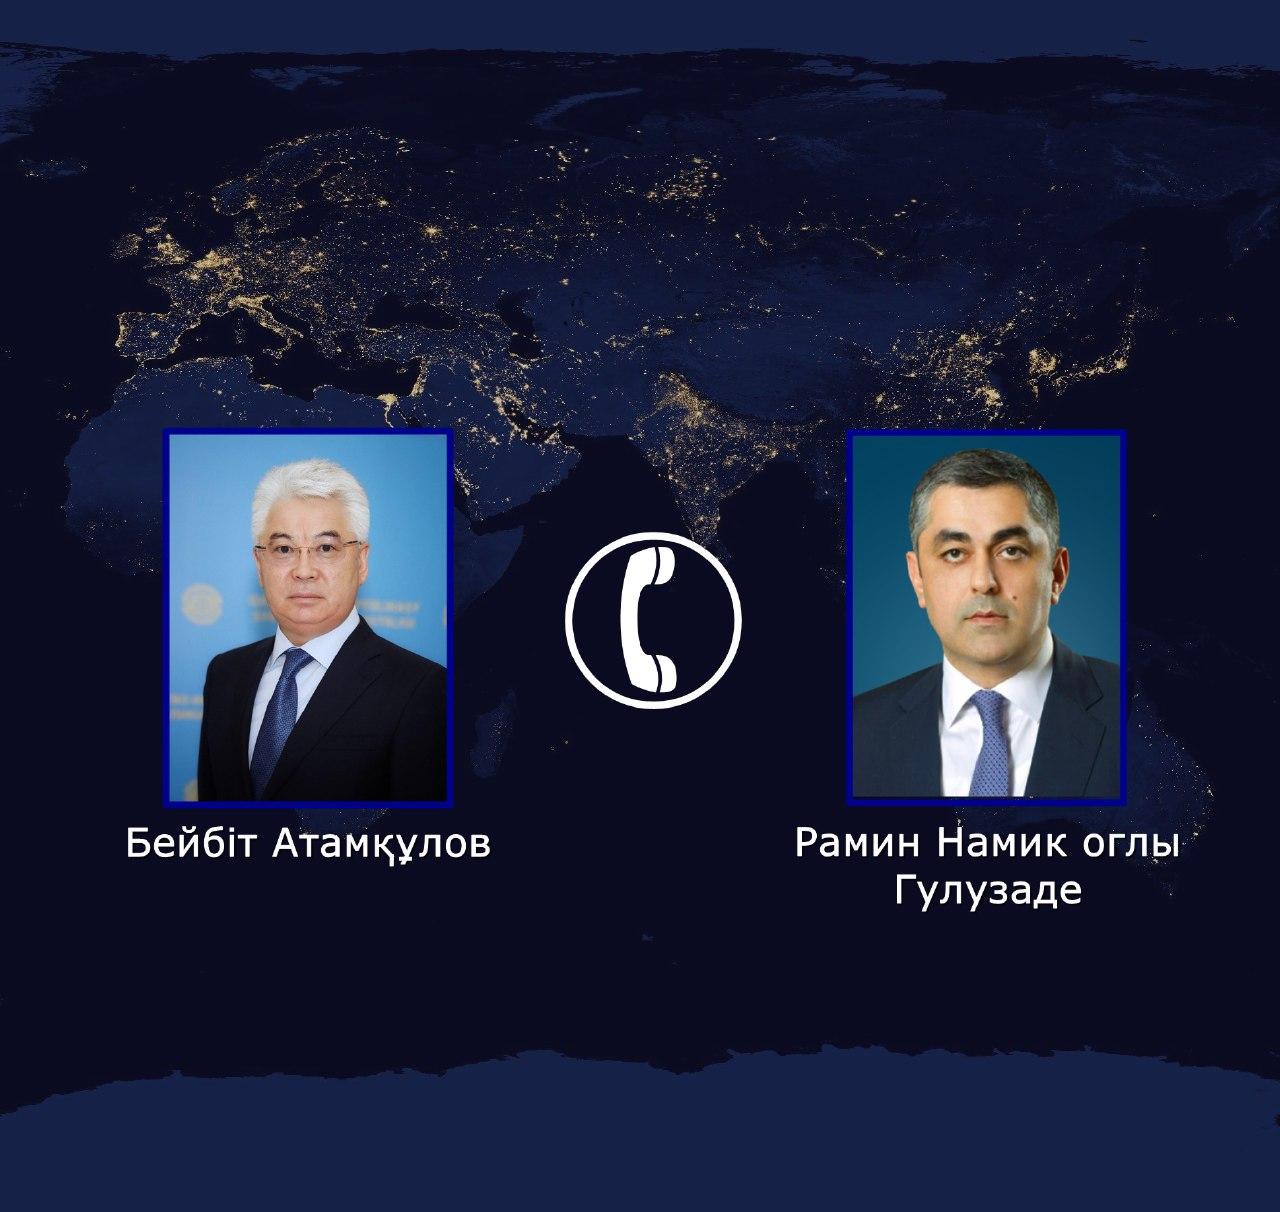 Azerbaijan, Kazakhstan mull economic ties, resumption of flights